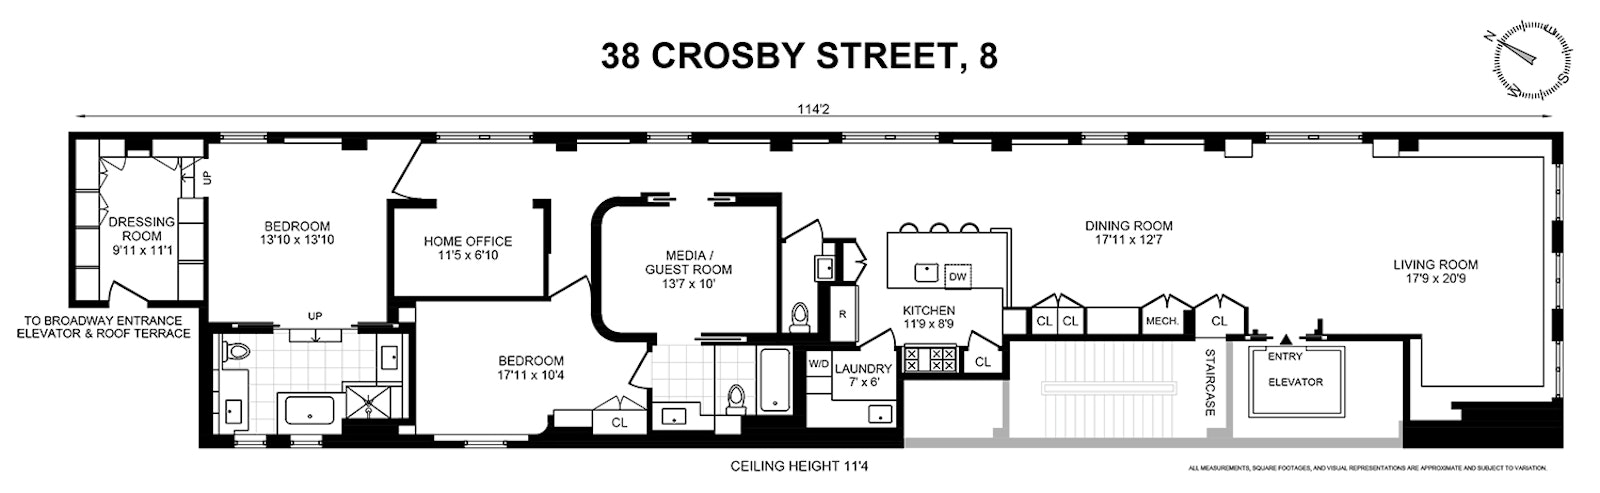 Floorplan for 38 Crosby Street, 8